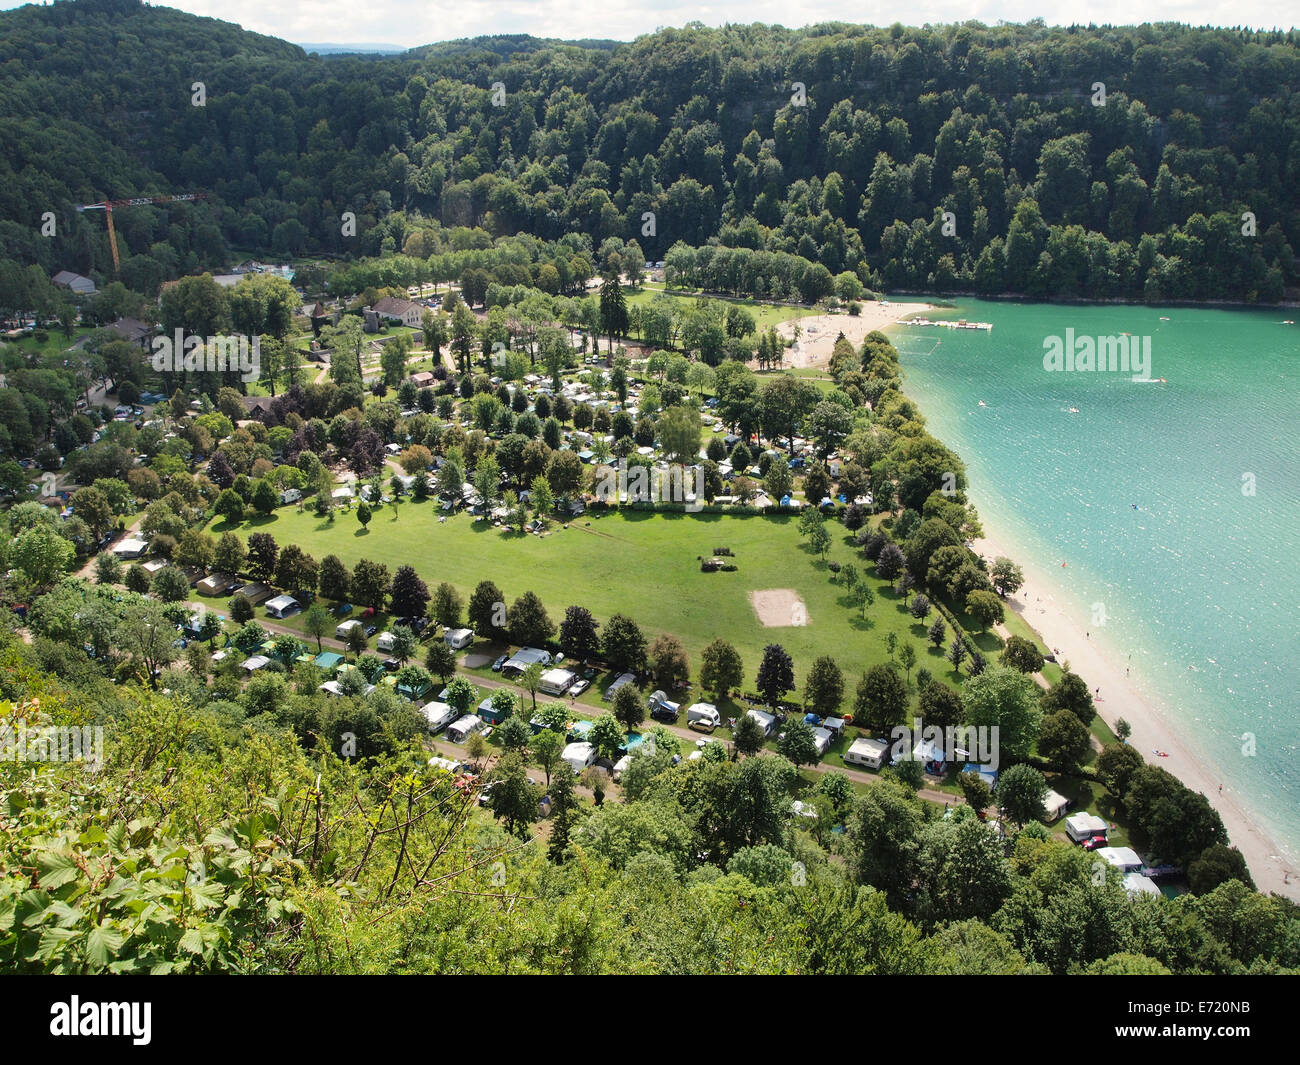 Domaine de Chalain camping site on Lac de Chalain lake, Jura, France Stock Photo